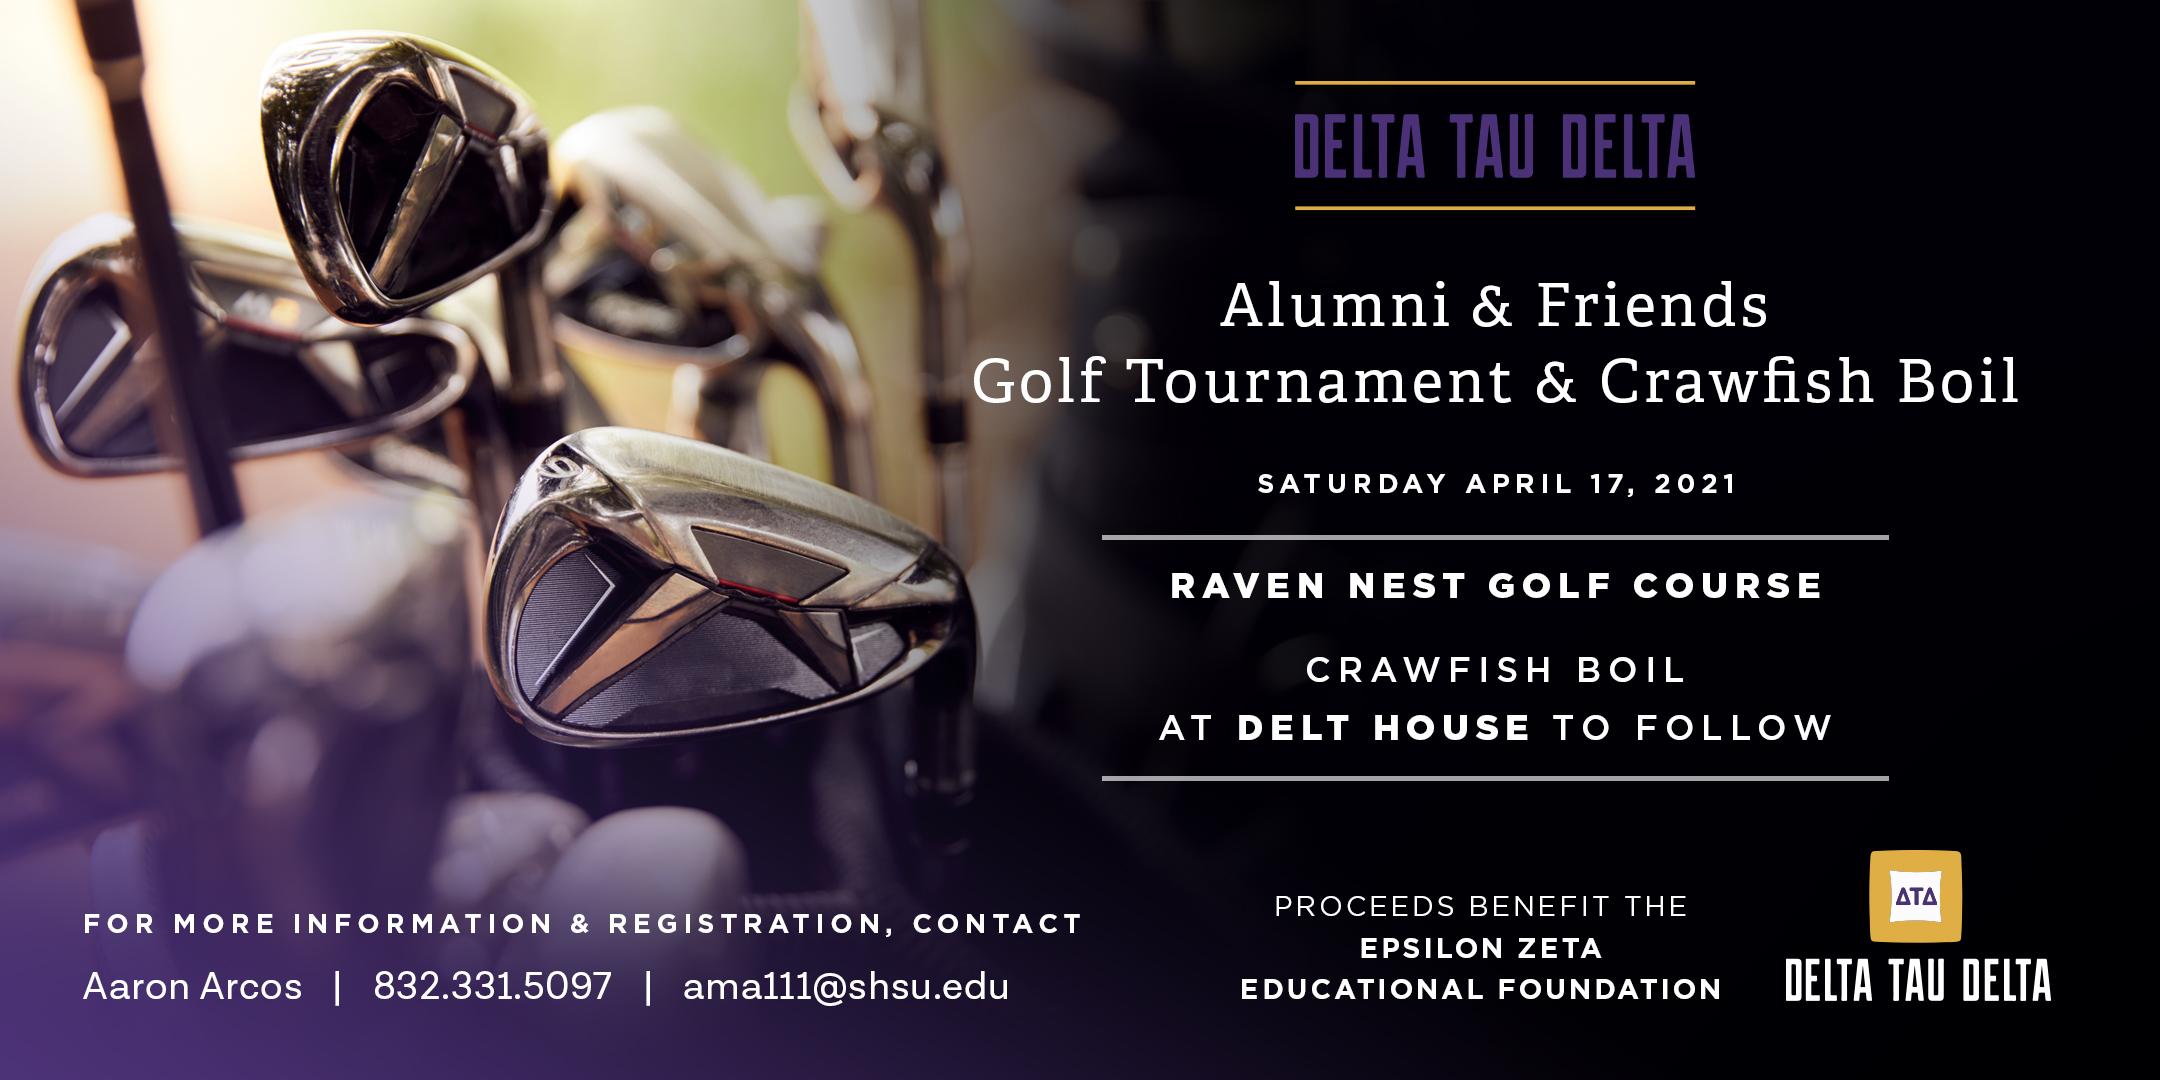 Delta Tau Delta Alumni & Friends Golf Tournament & Crawfish Boil